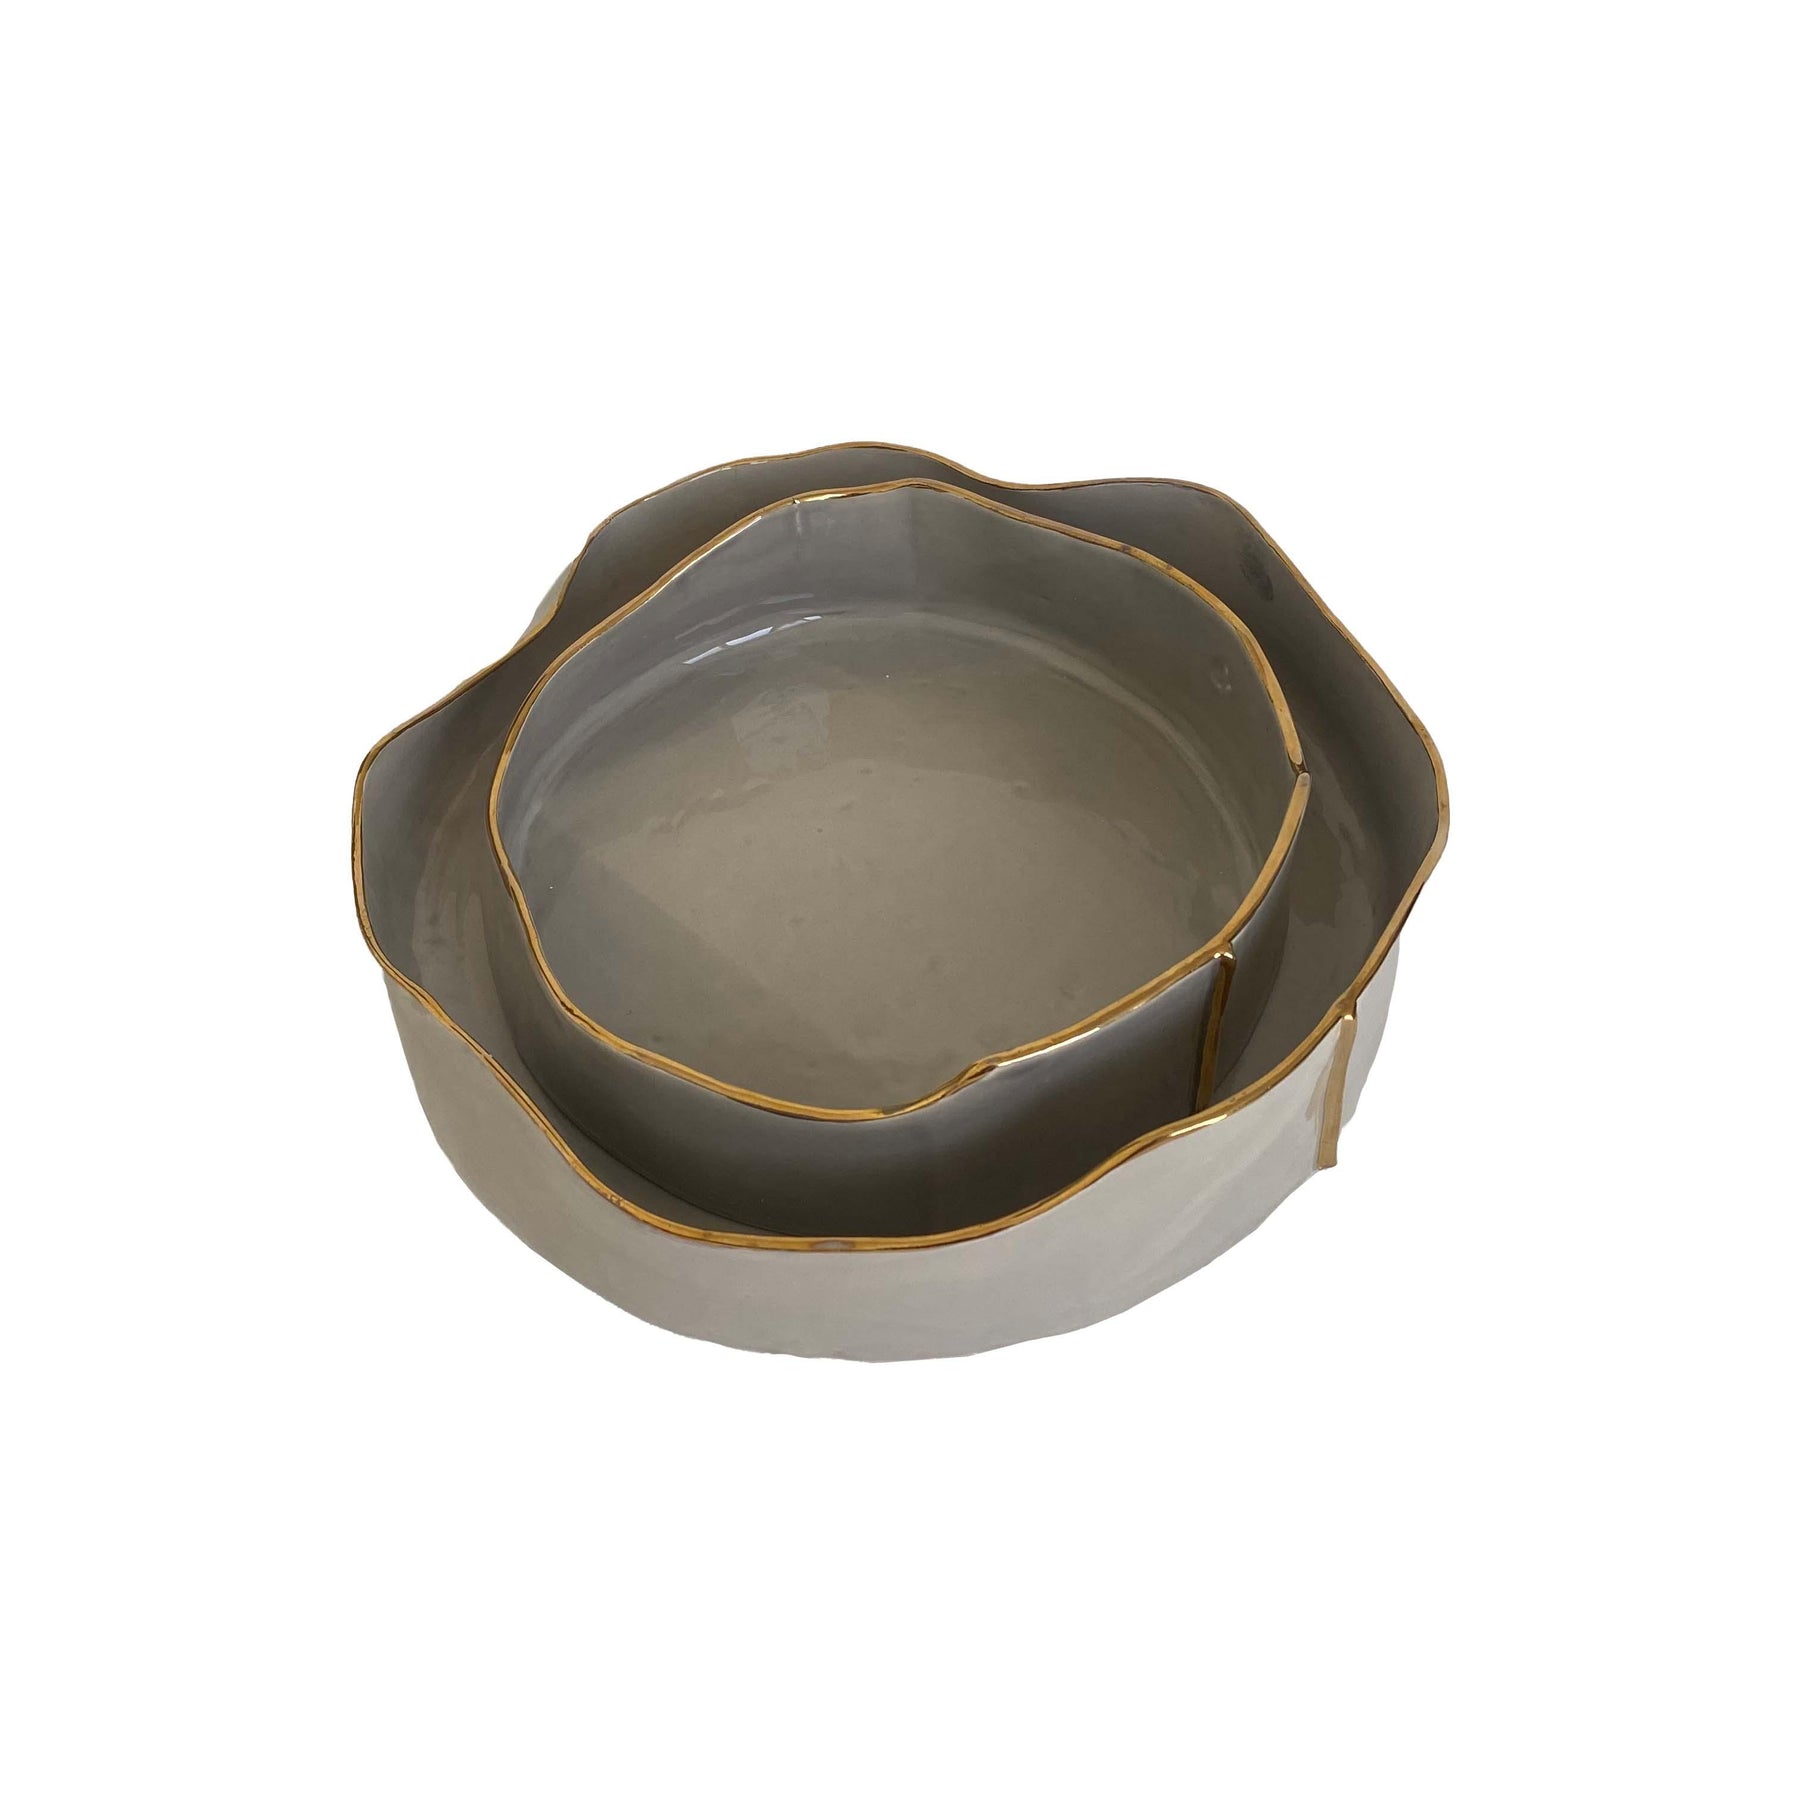 The Modern Stripes - Round Ceramic Bowl: Large - FLTRD UAE